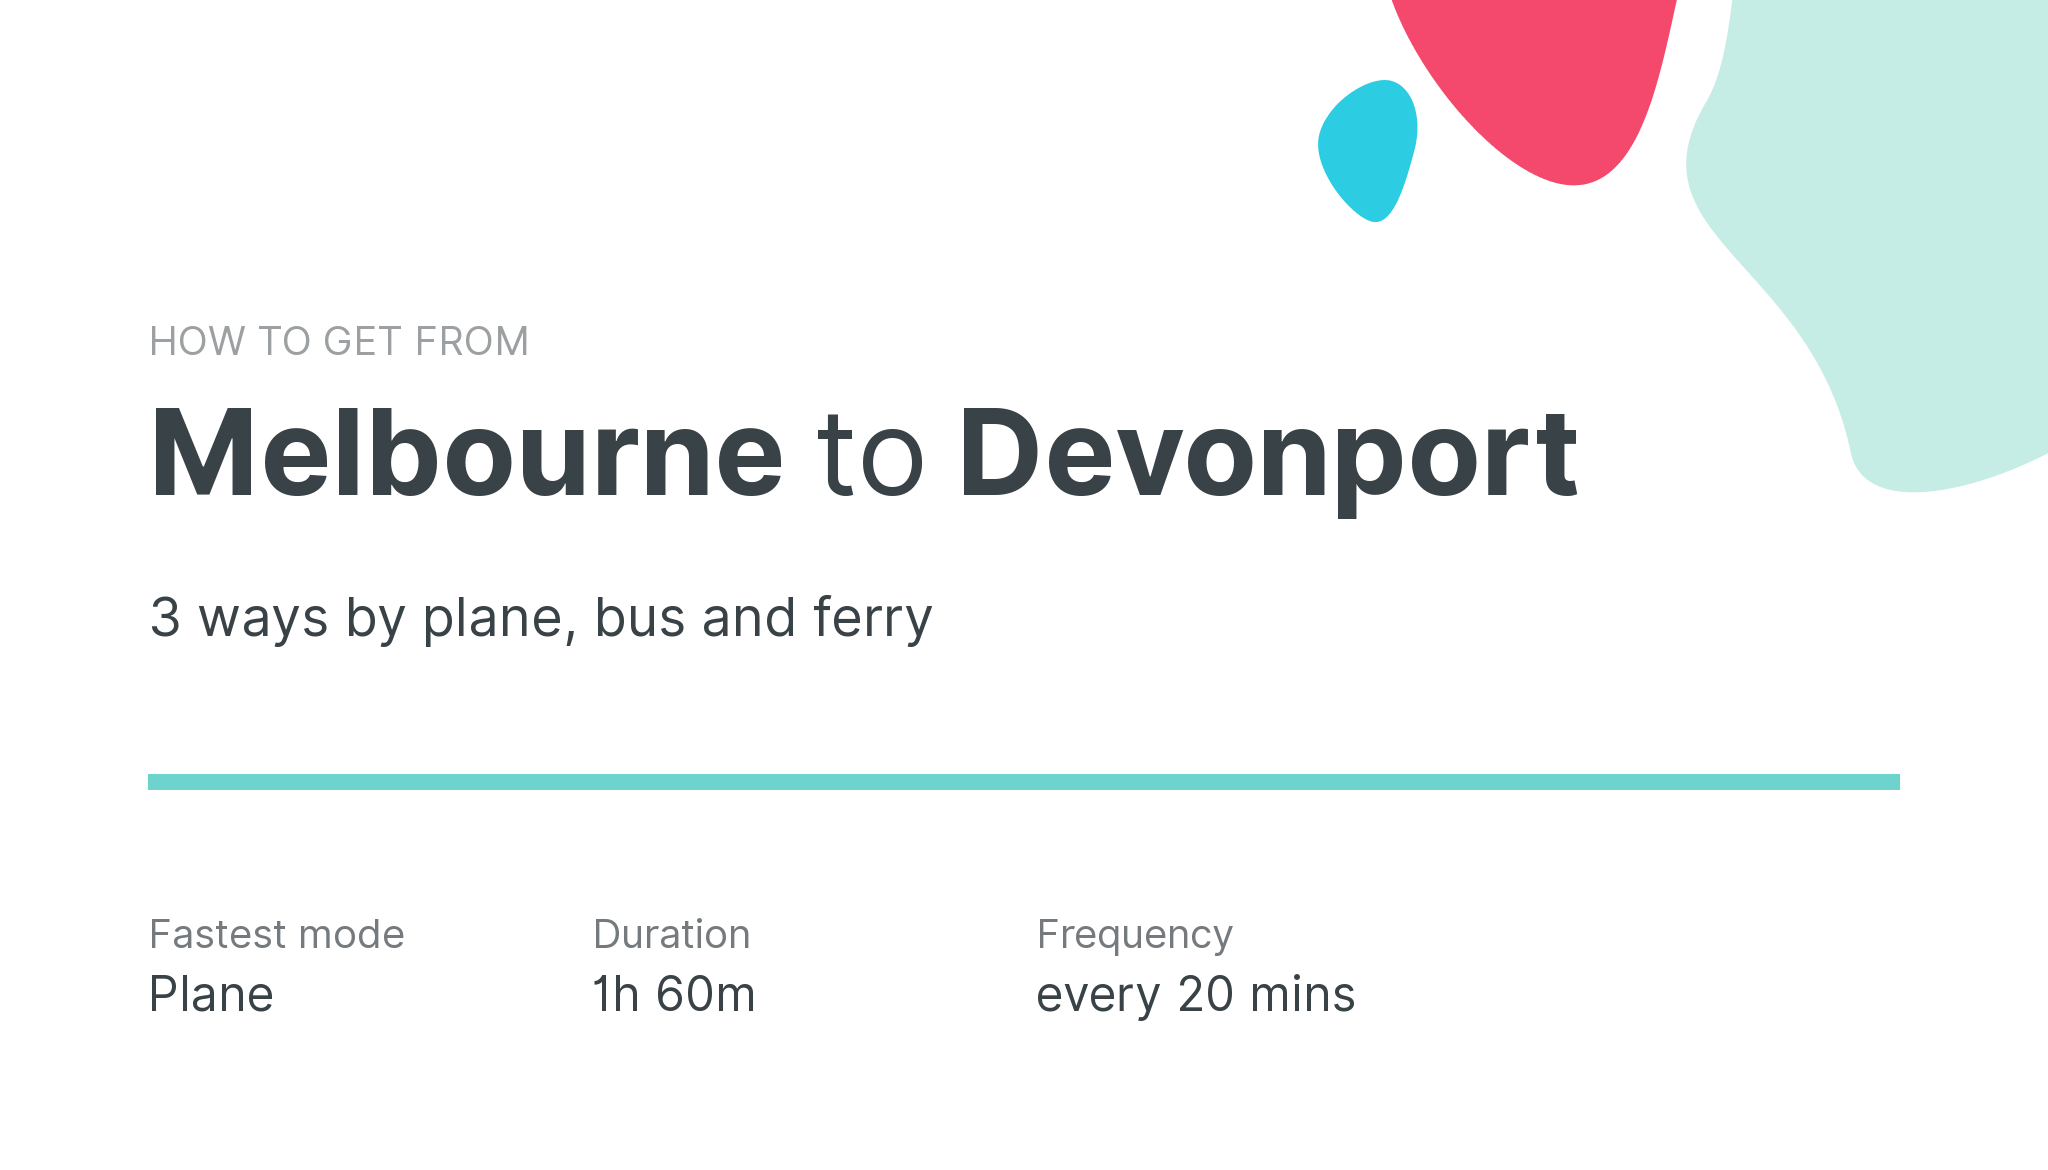 How do I get from Melbourne to Devonport